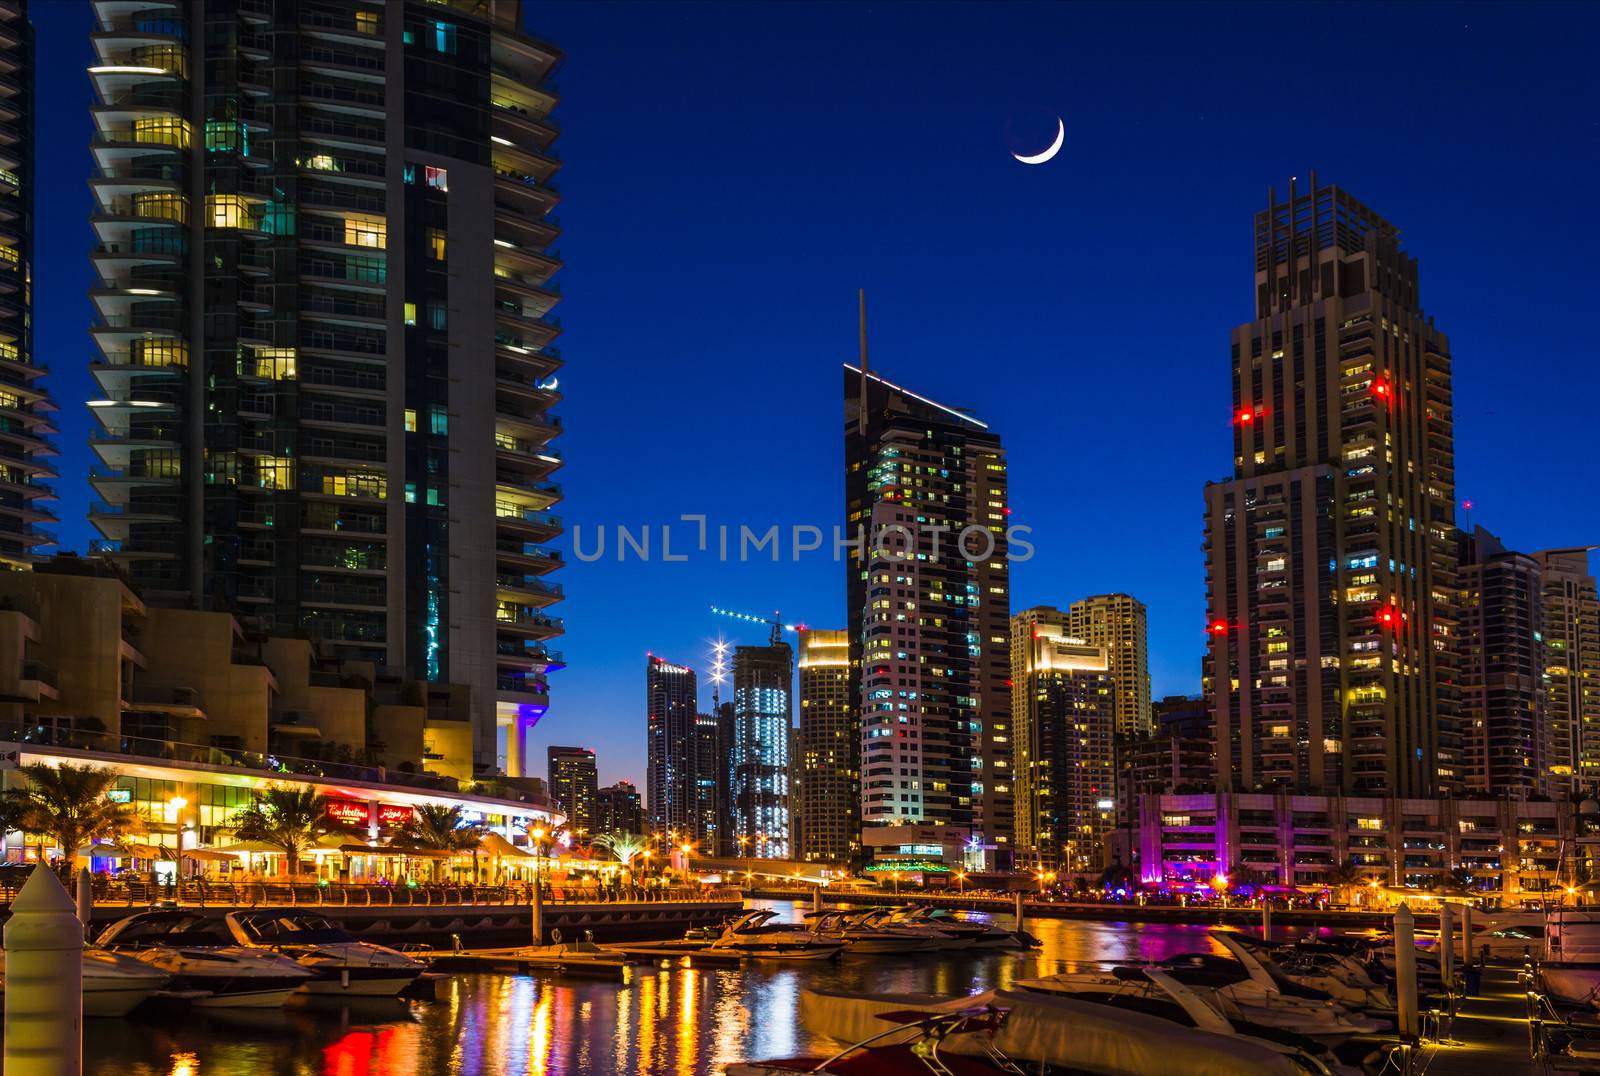 DUBAI, UAE - NOVEMBER 16: Nightlife in Dubai Marina. UAE. November 16, 2012. Dubai was the fastest developing city in the world between 2002 and 2008.